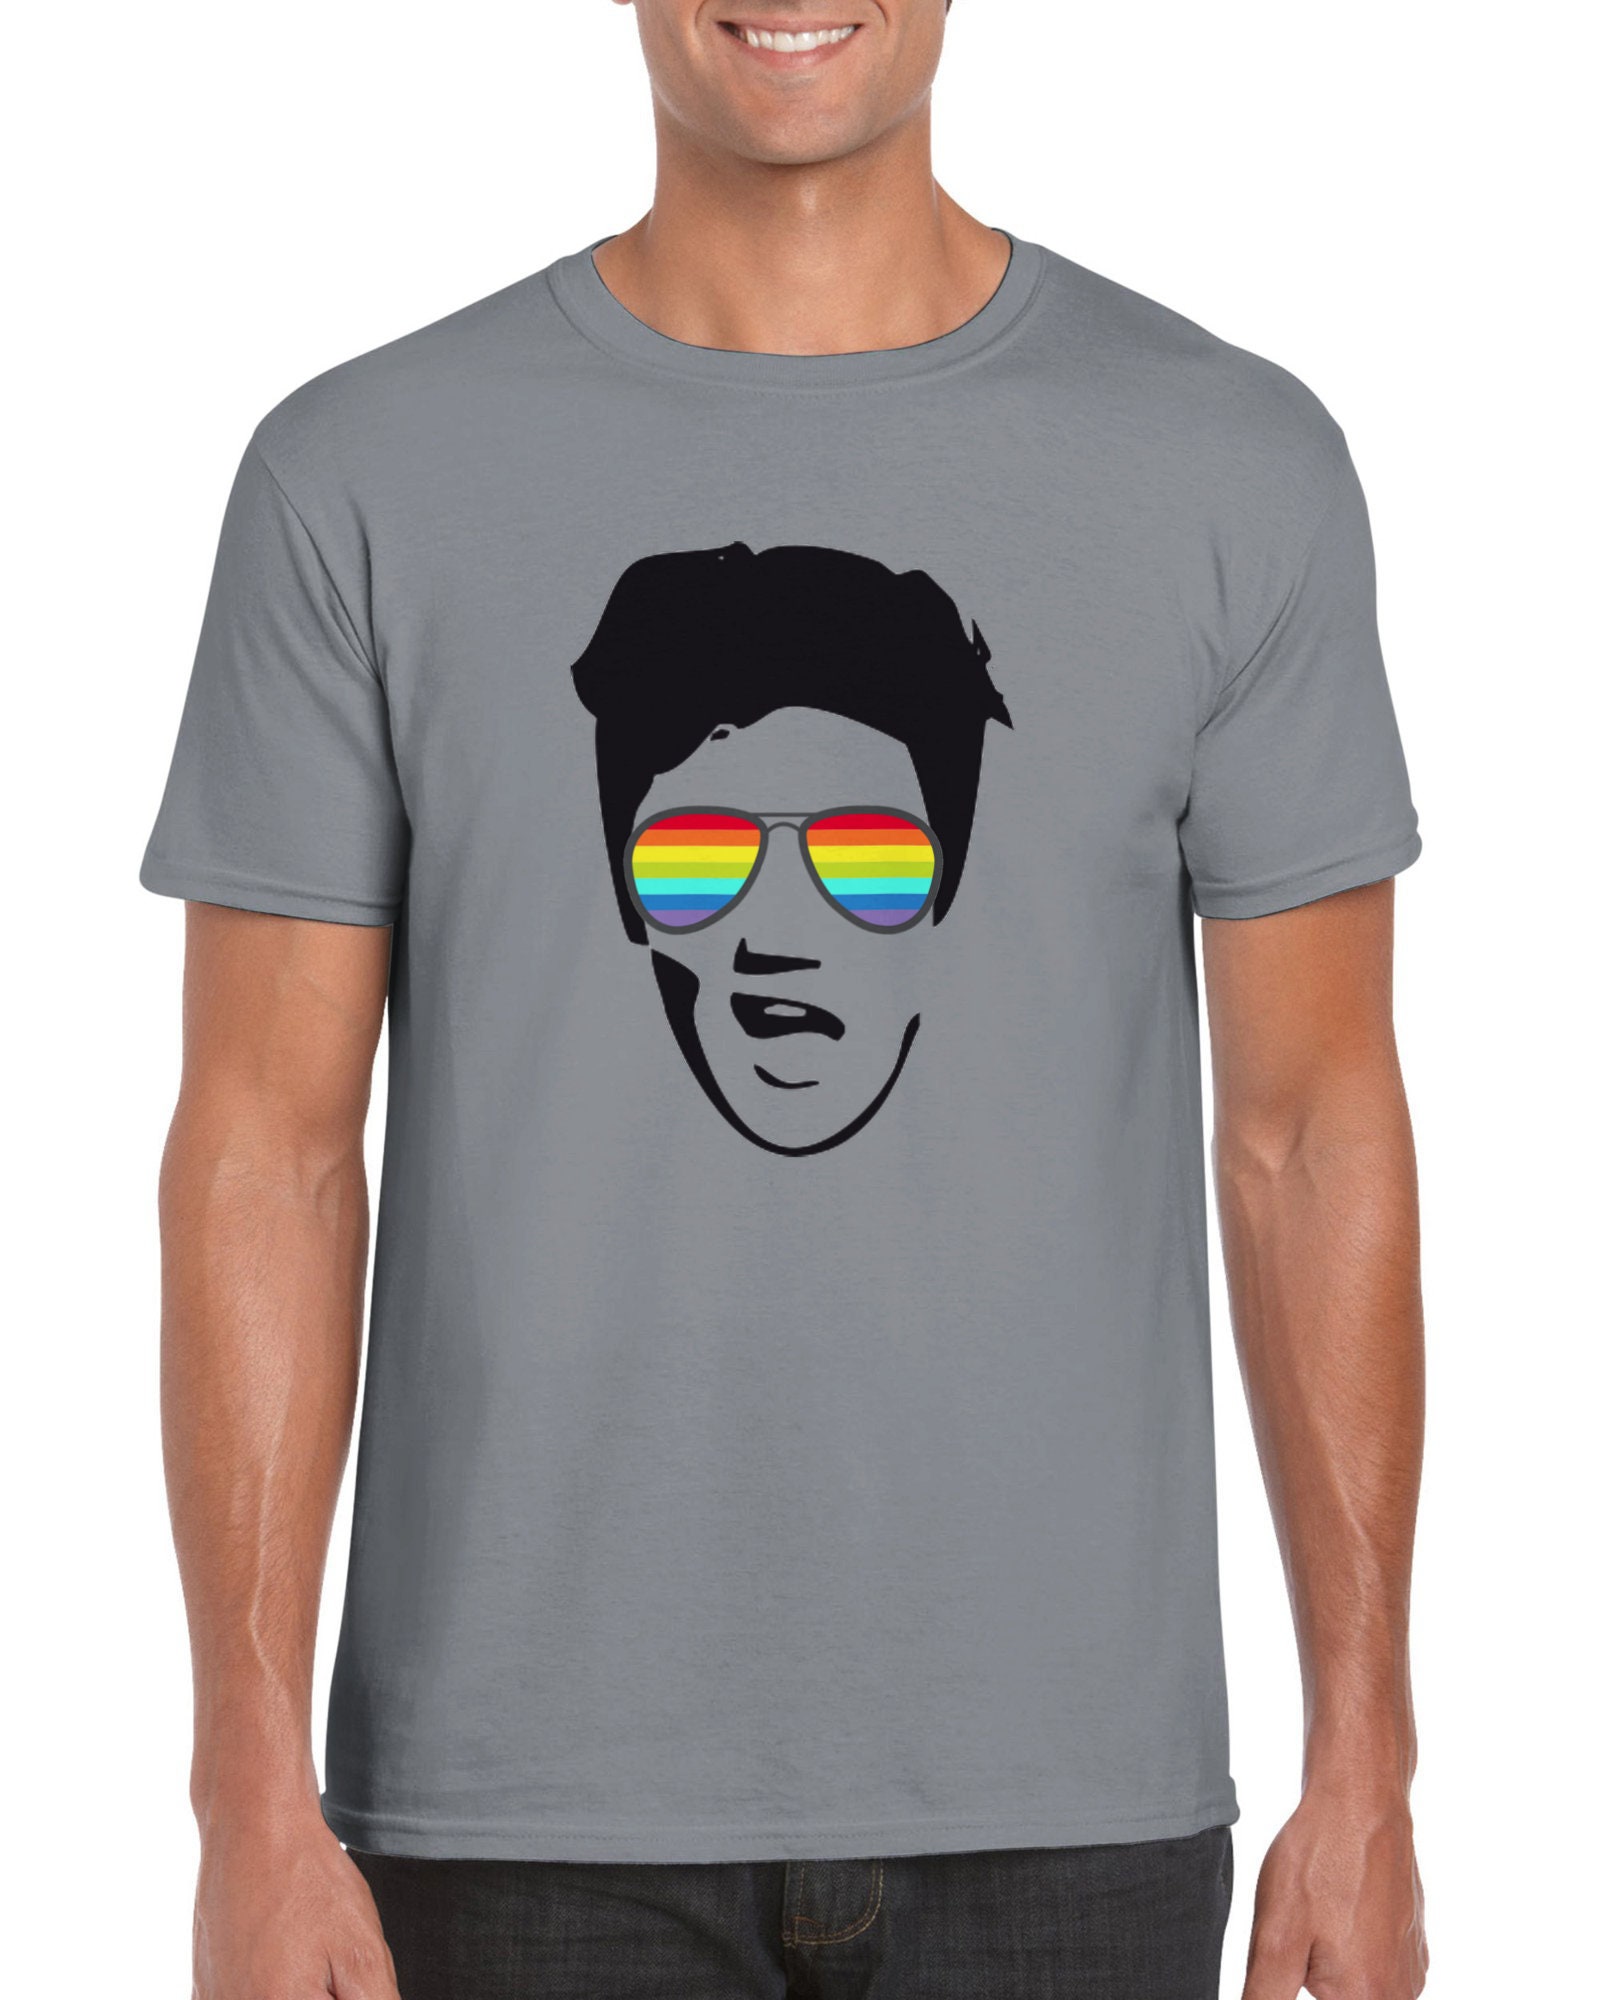 LGBTQ Rainbow Sunglasses LGBT Shirt Pride 2021 Unisex Crewneck T-shirt Elvis Tribute